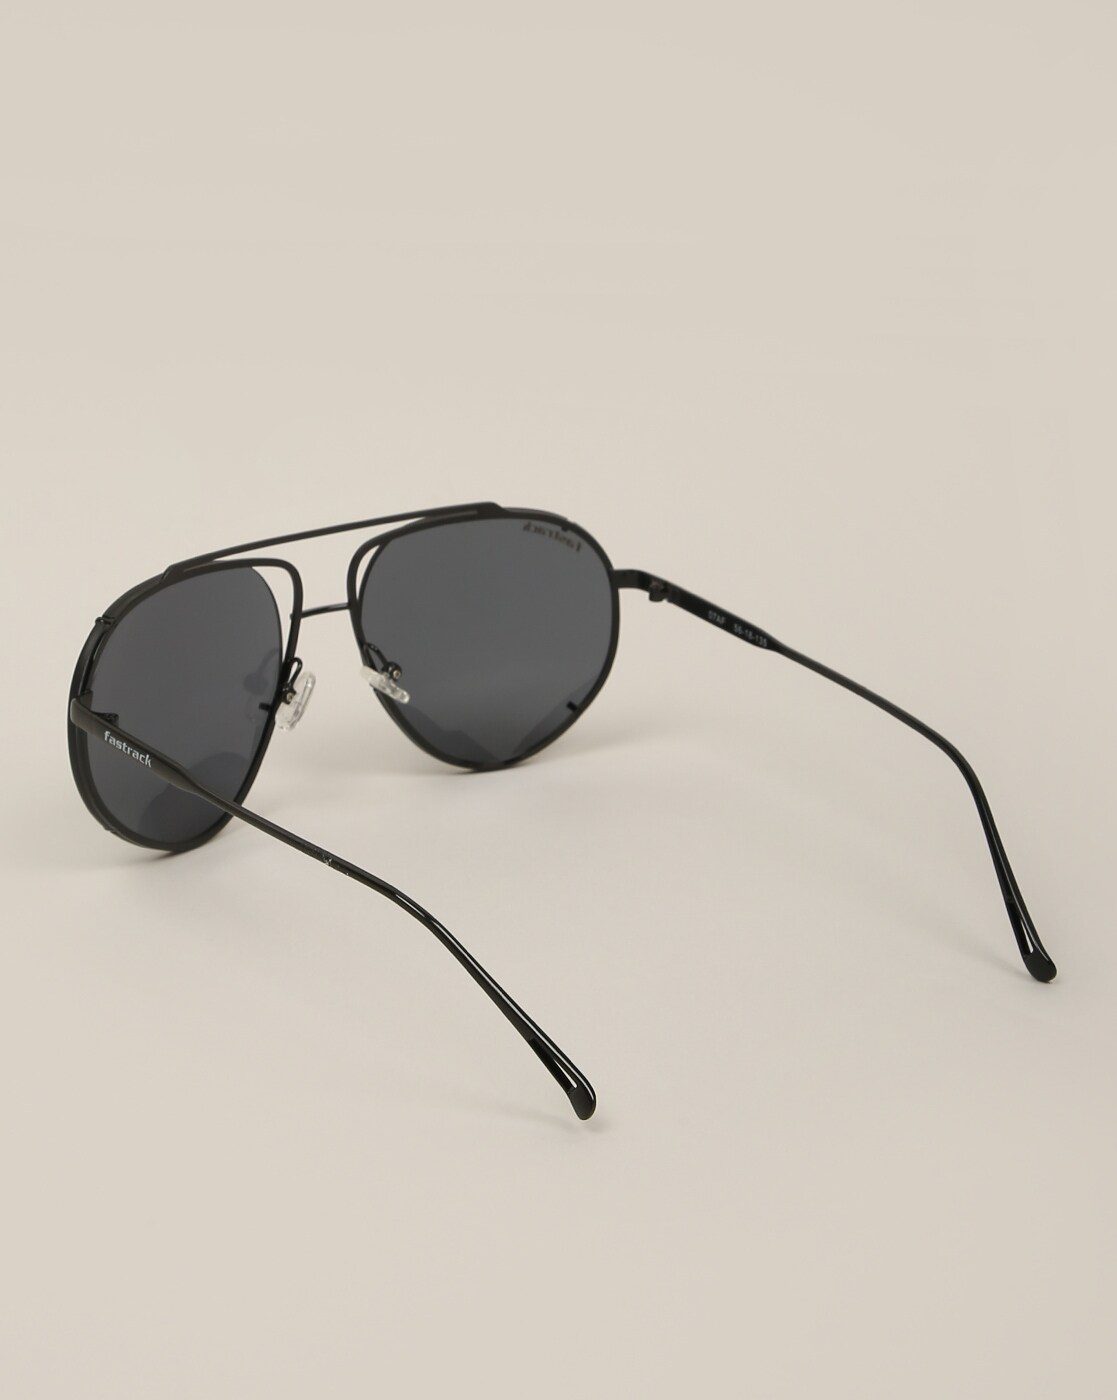 Buy Black Frame Sunglasses Online at Best Price | Fastrack Eyewear